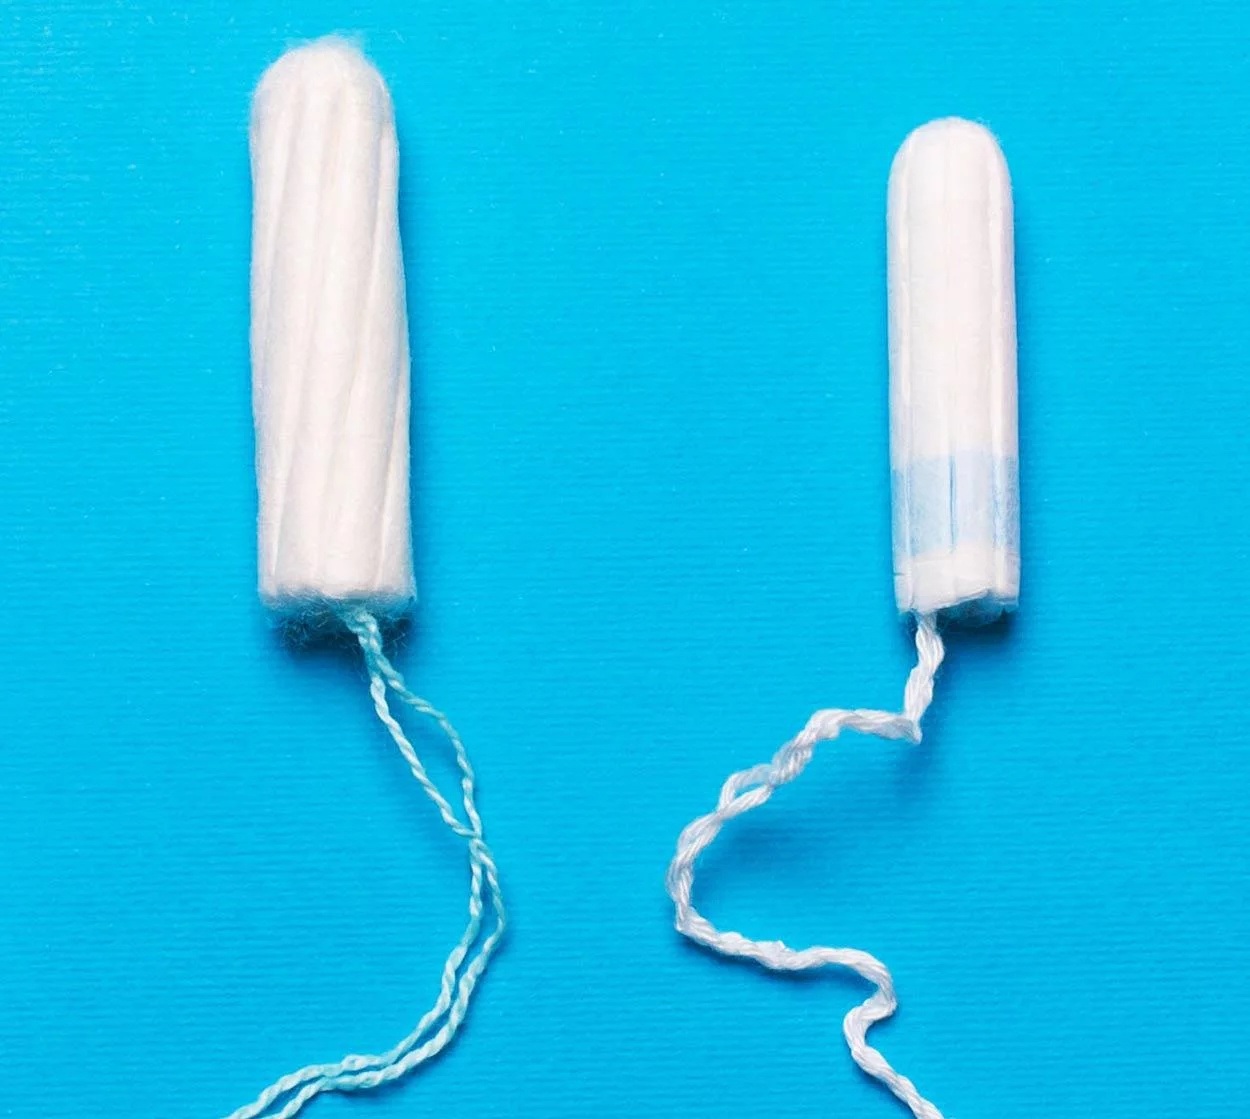 Sanitary tampons and menstrual cups | Sense.info